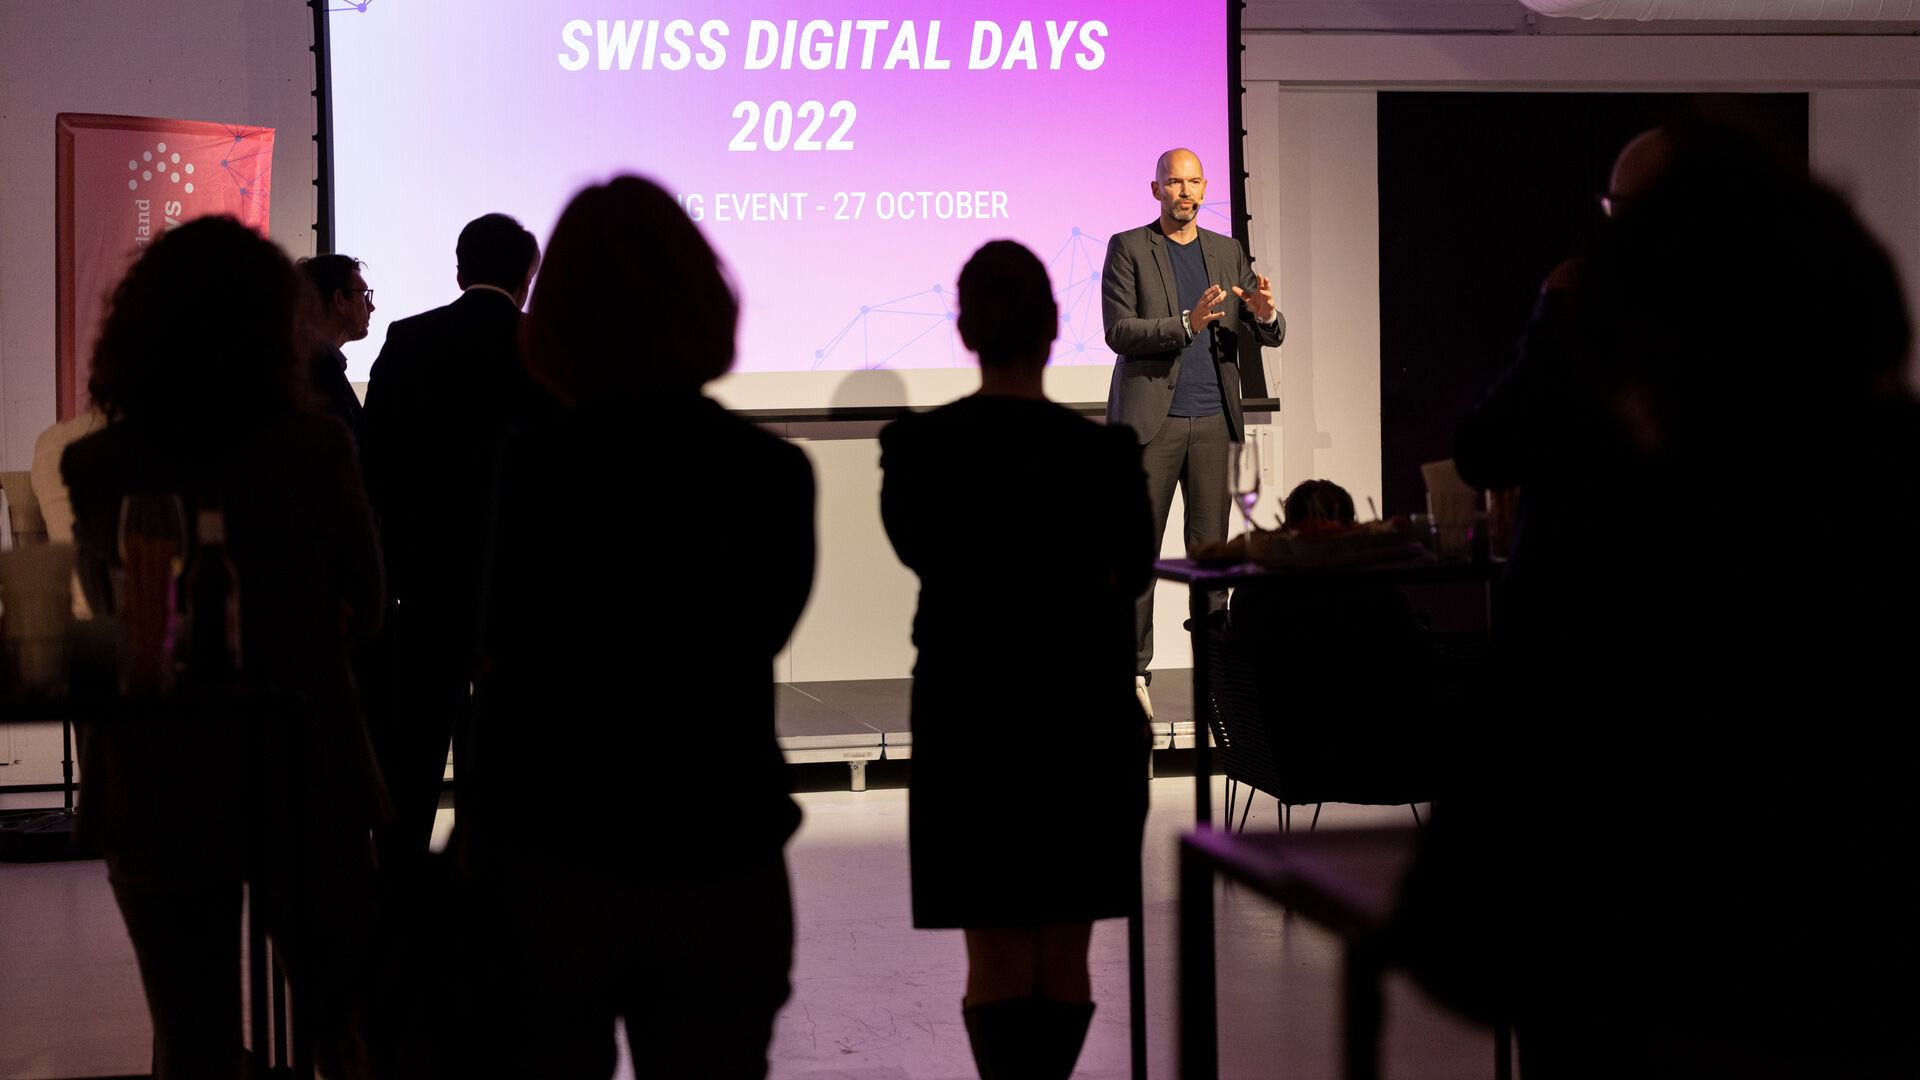 Swiss Digital Days: 2022월 27일 Zug의 Freiruum에서 열리는 "Swiss Digital Days" XNUMX 폐막 행사